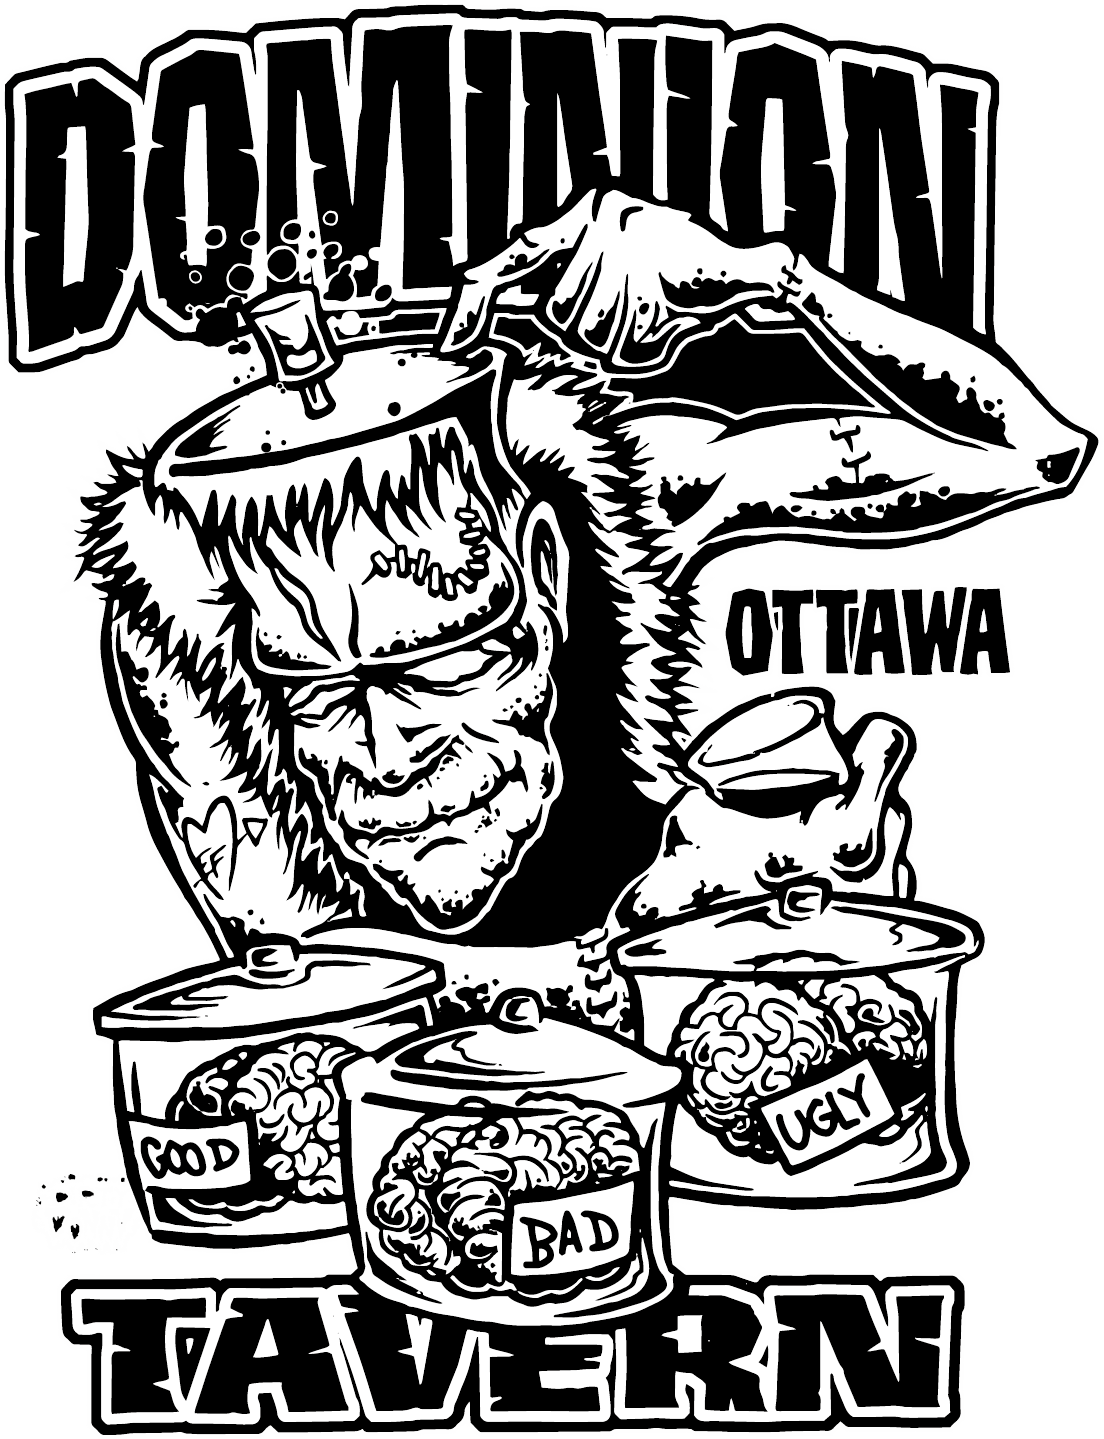 Dominion Tavern Dirty Donny logo